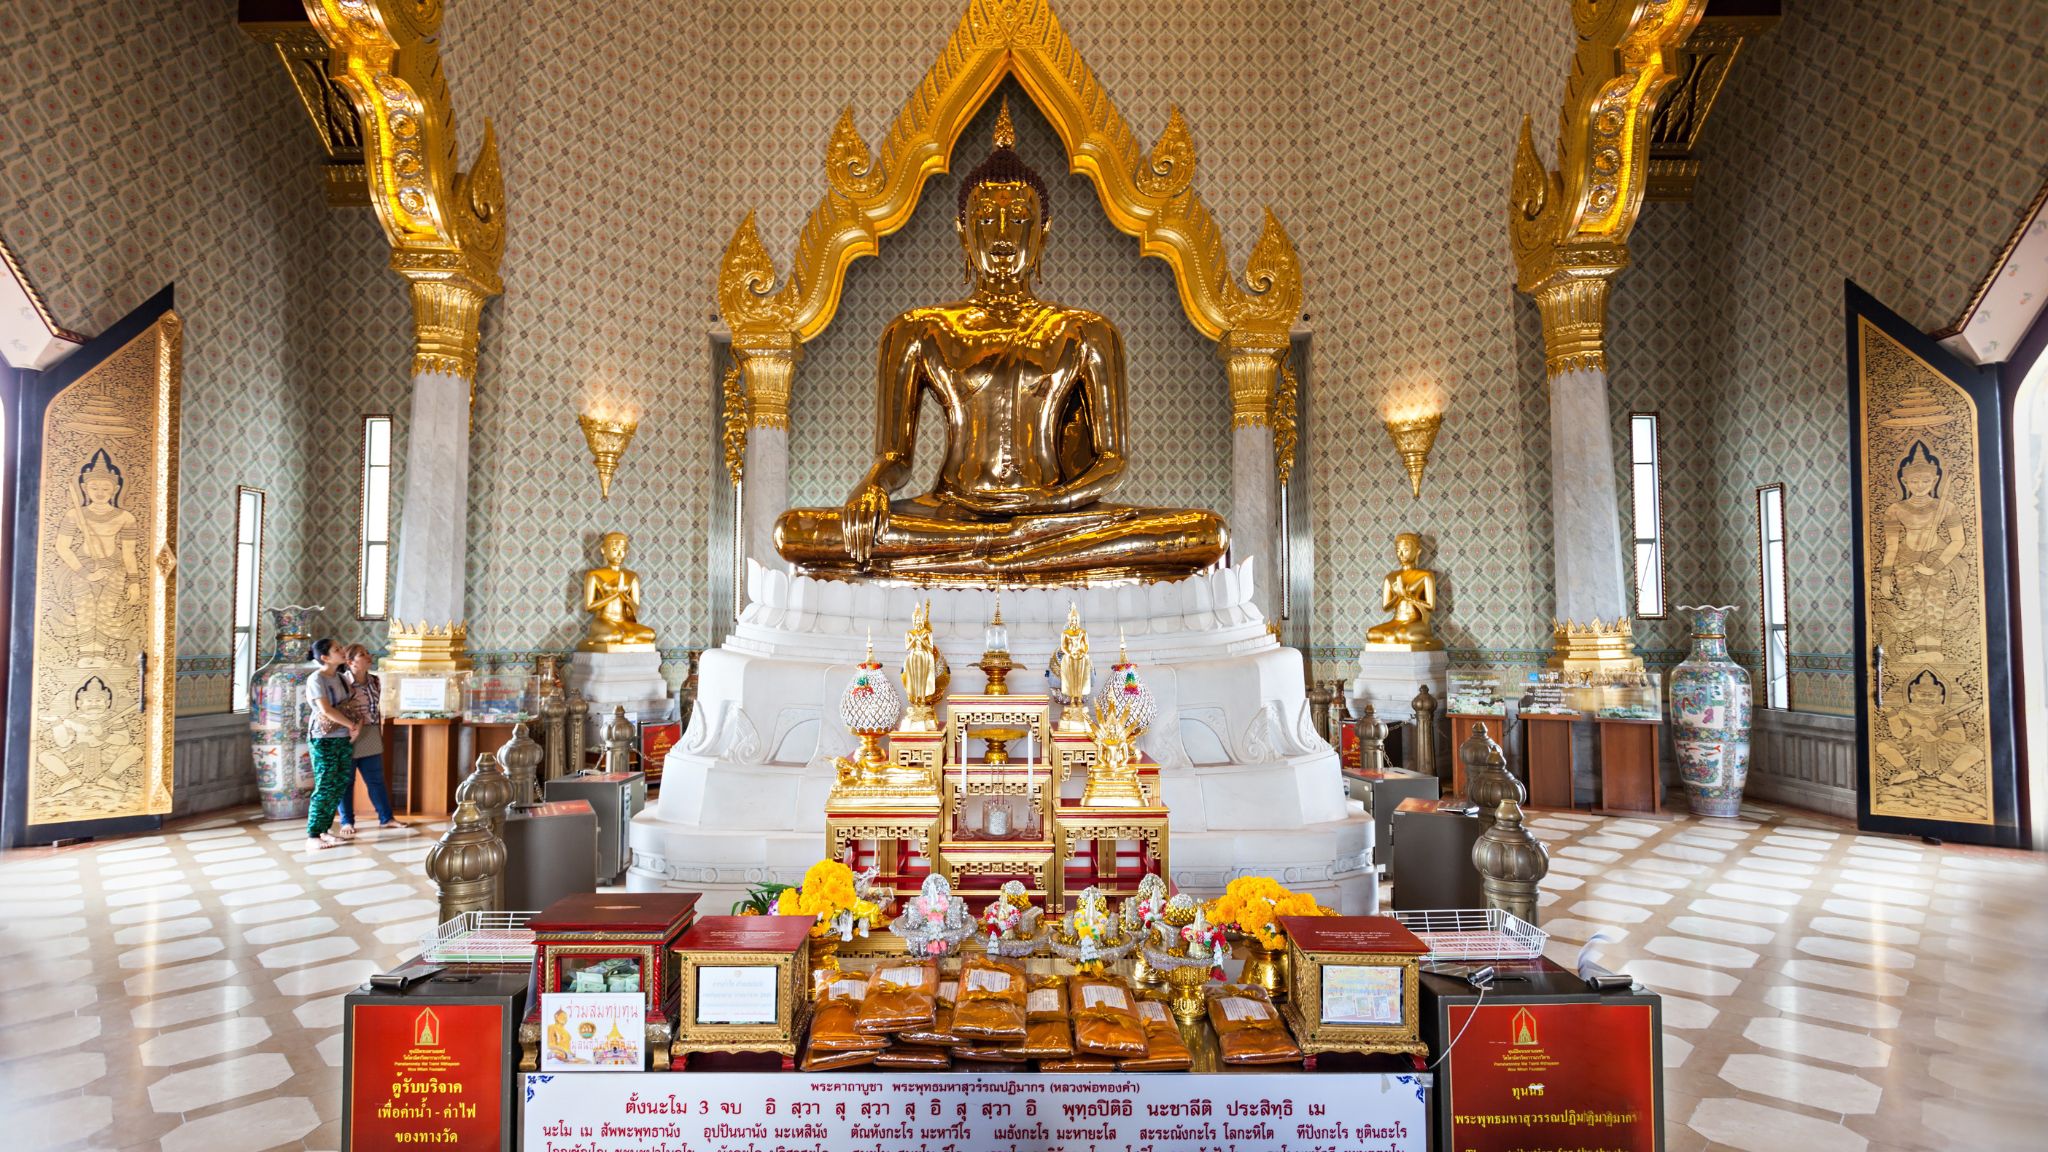 Day 2 Admire The Golden Buddha Statue In Wat Traimit